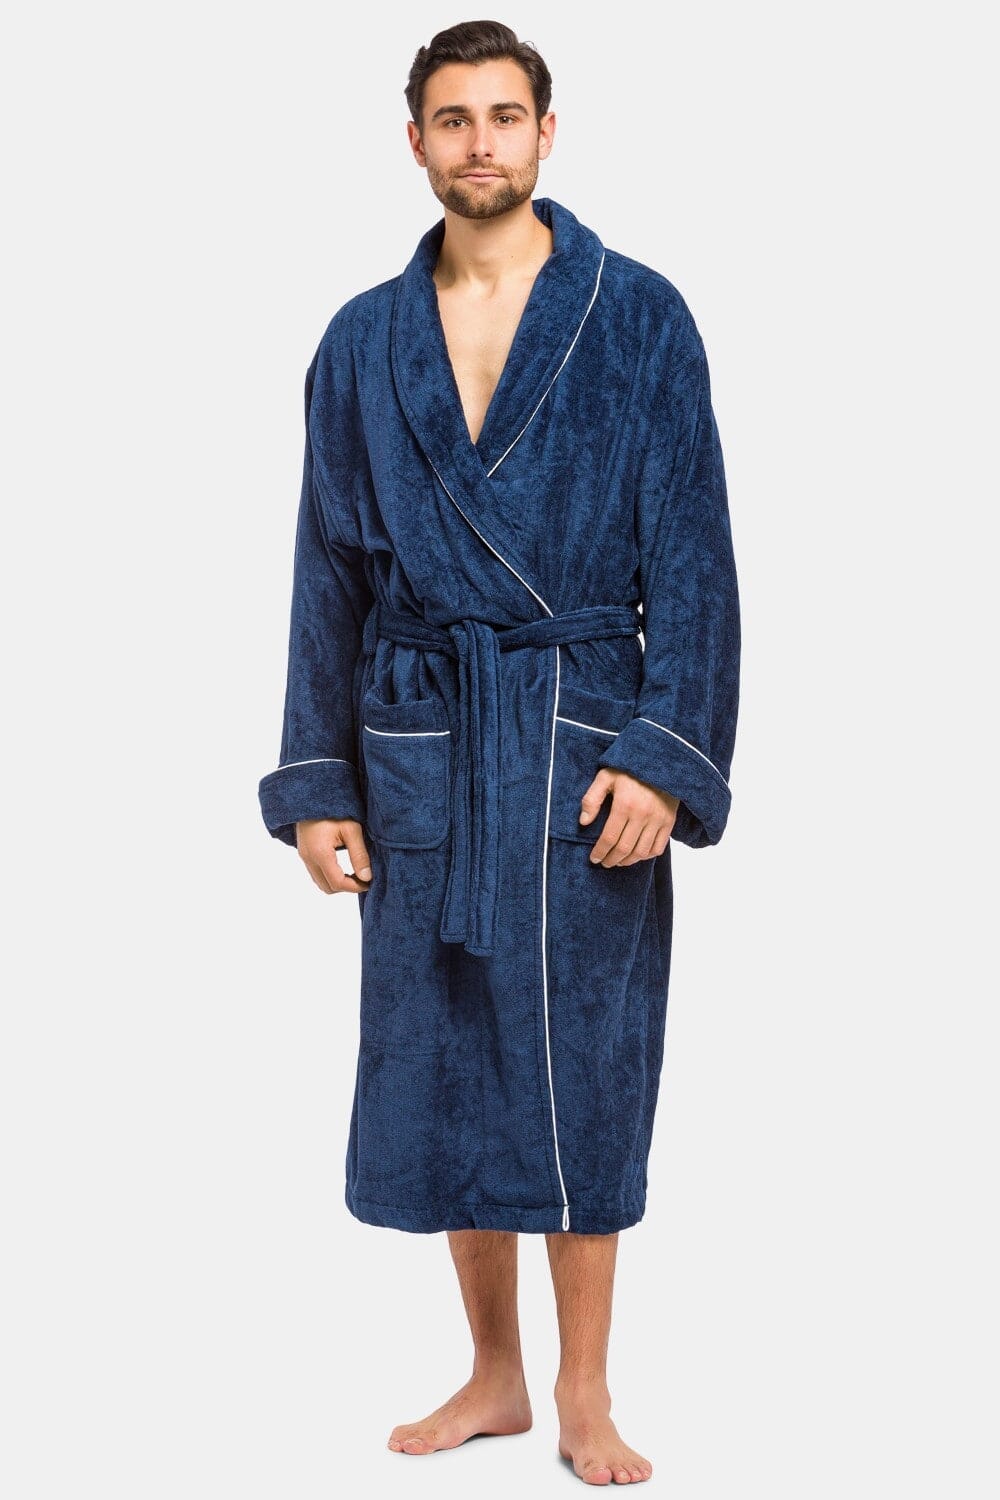 Oksun Womens Fleece Warm Robe,Cozy Fluffy Long Bathrobe,Plush Night Dressing  Robes for Women at Amazon Women's Clothing store